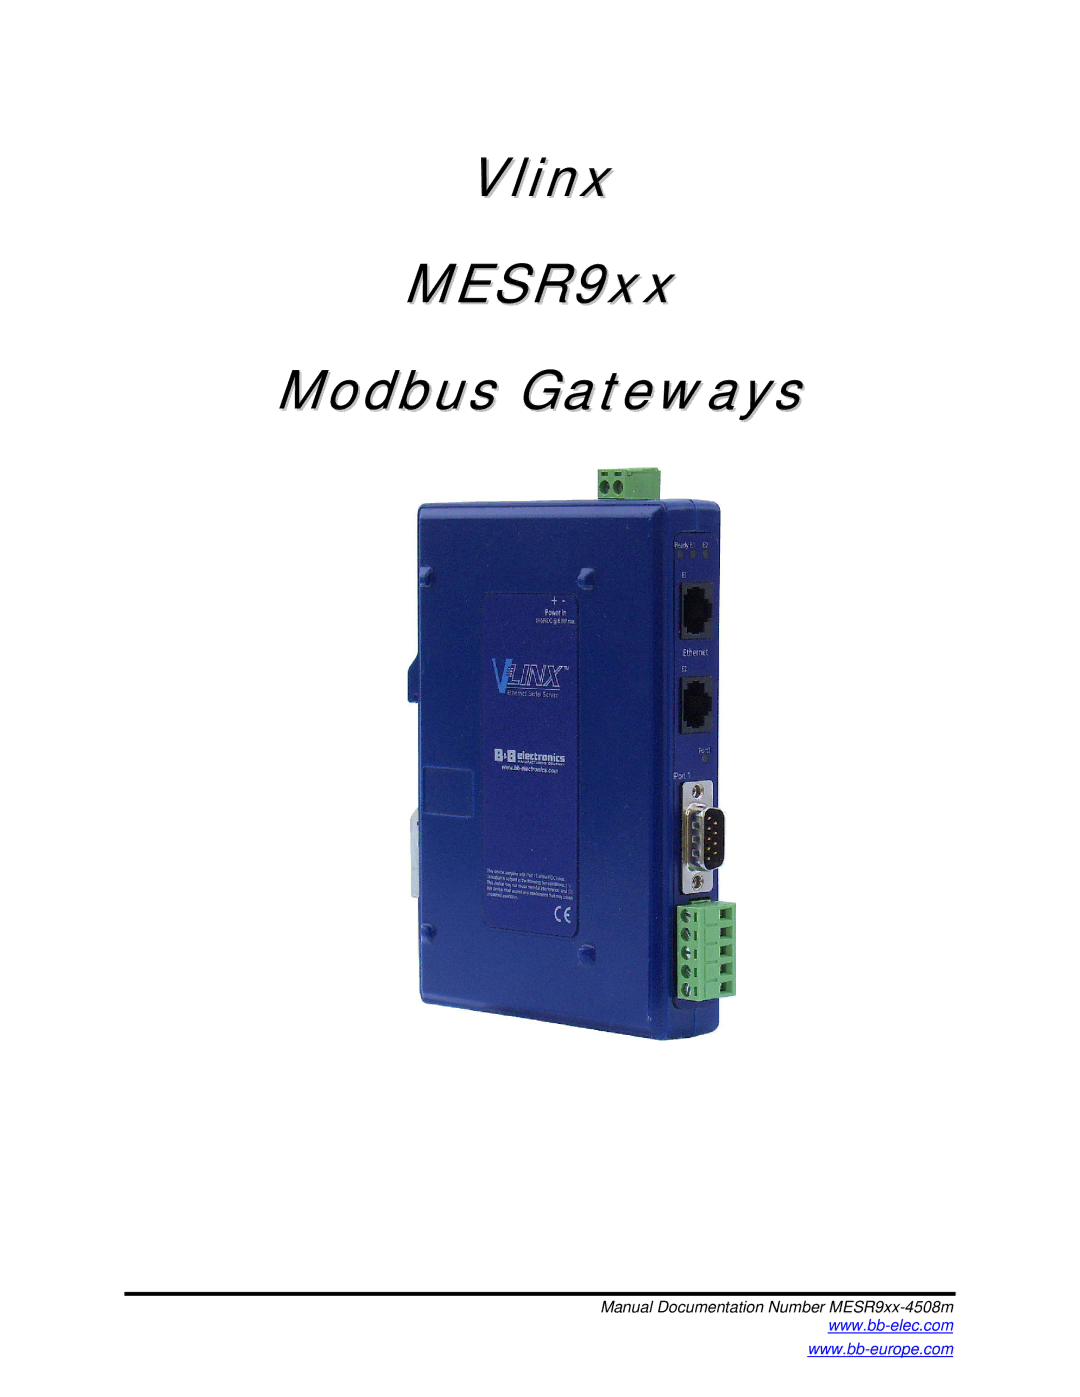 B&B Electronics manual Vlinx MESR9xx Modbus Gateways 